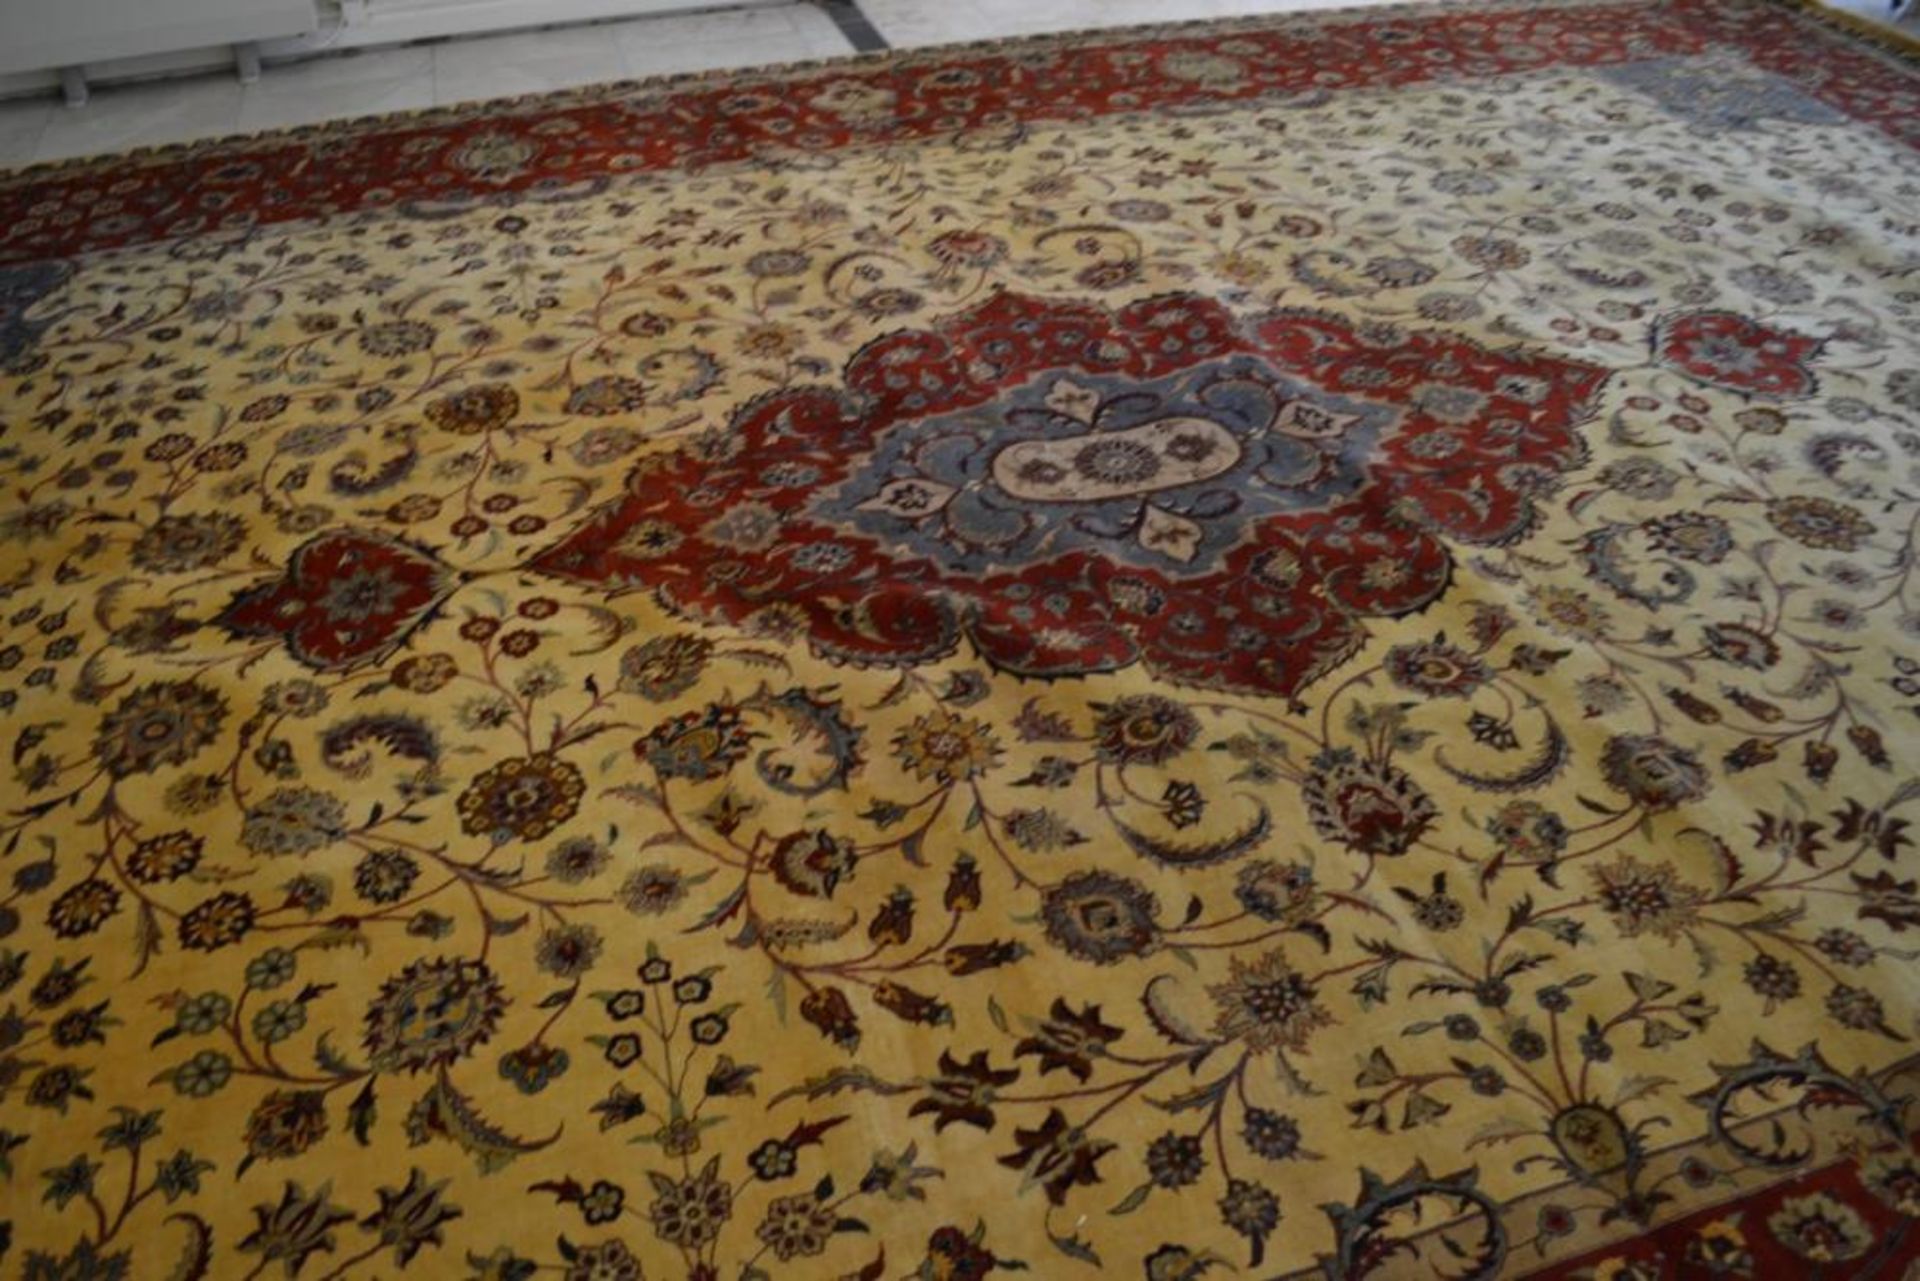 1 x Very Fine Top Quality Pakistan Tabriz Design Carpet - 320 Knot Count - Dimensions: 546x376cm - N - Image 7 of 31